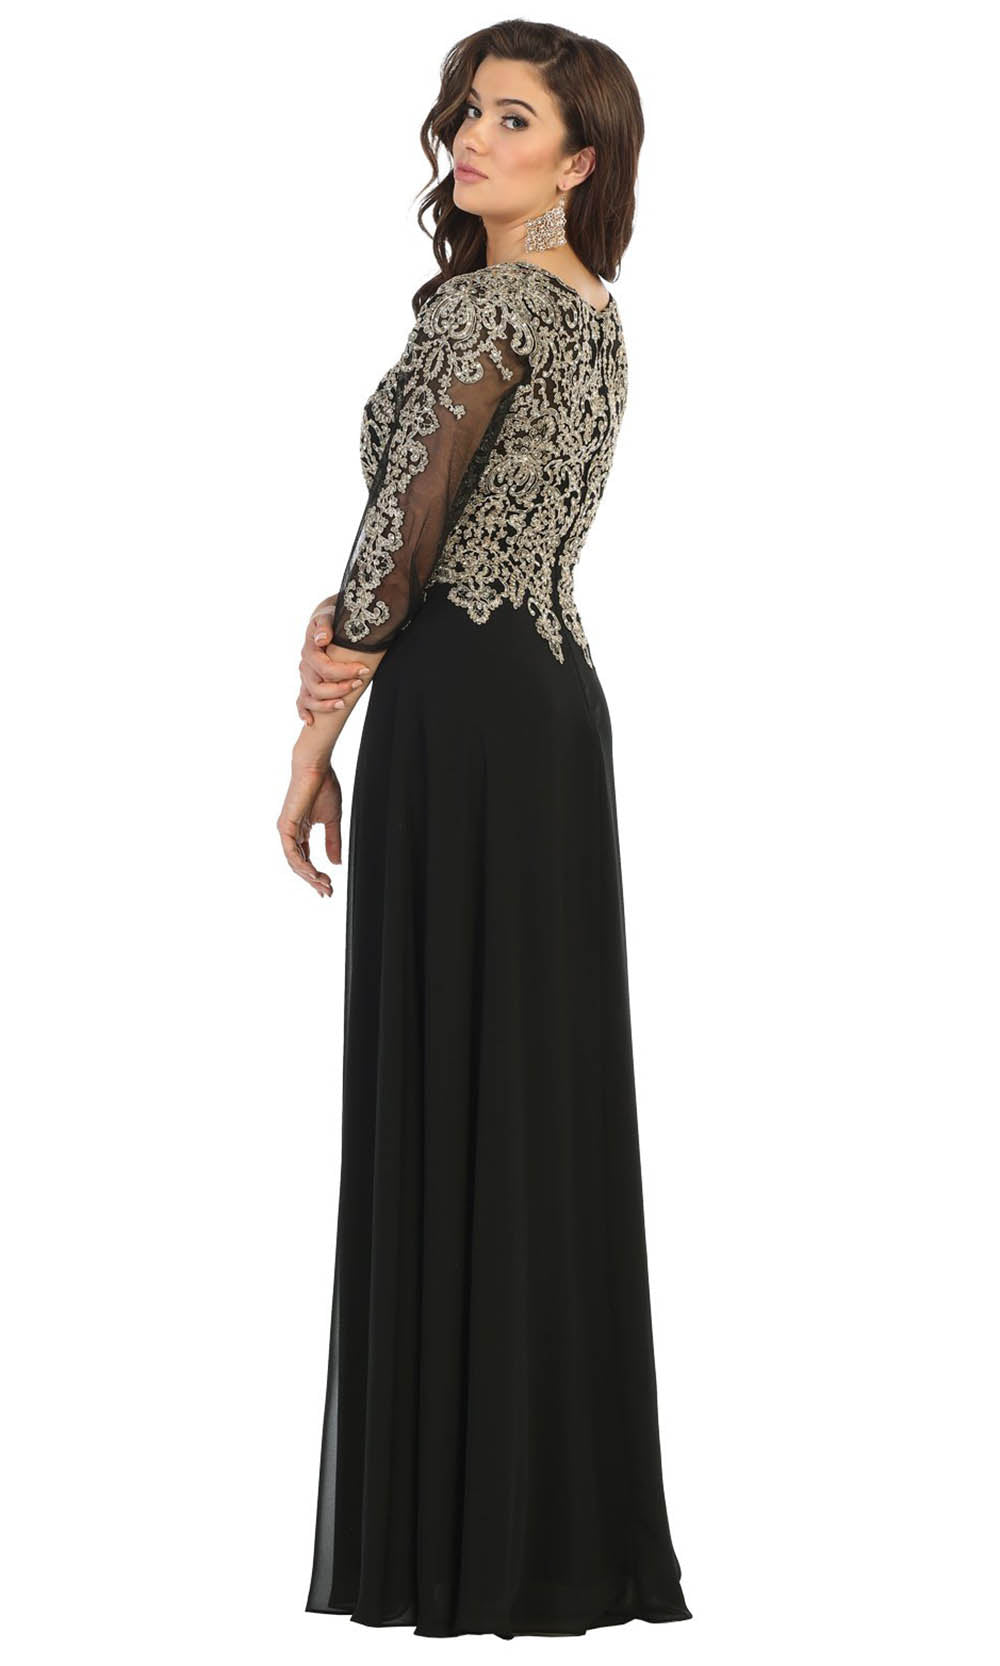 May Queen - MQ1670 Beaded Applique Formal Dress In Black